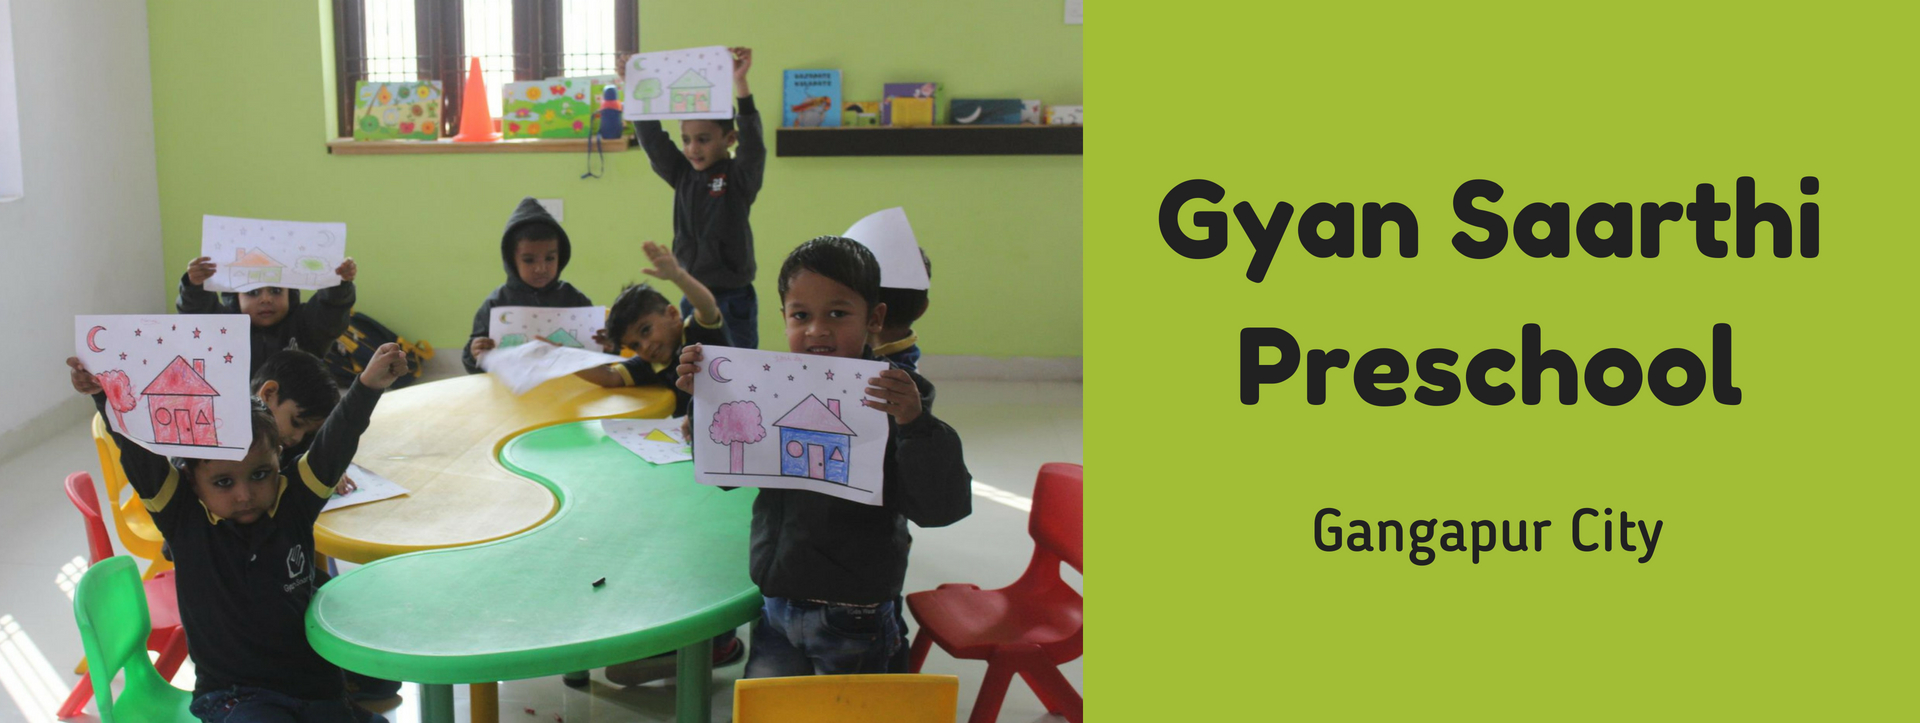 Gyan Saarthi Preschool, Gangapur City